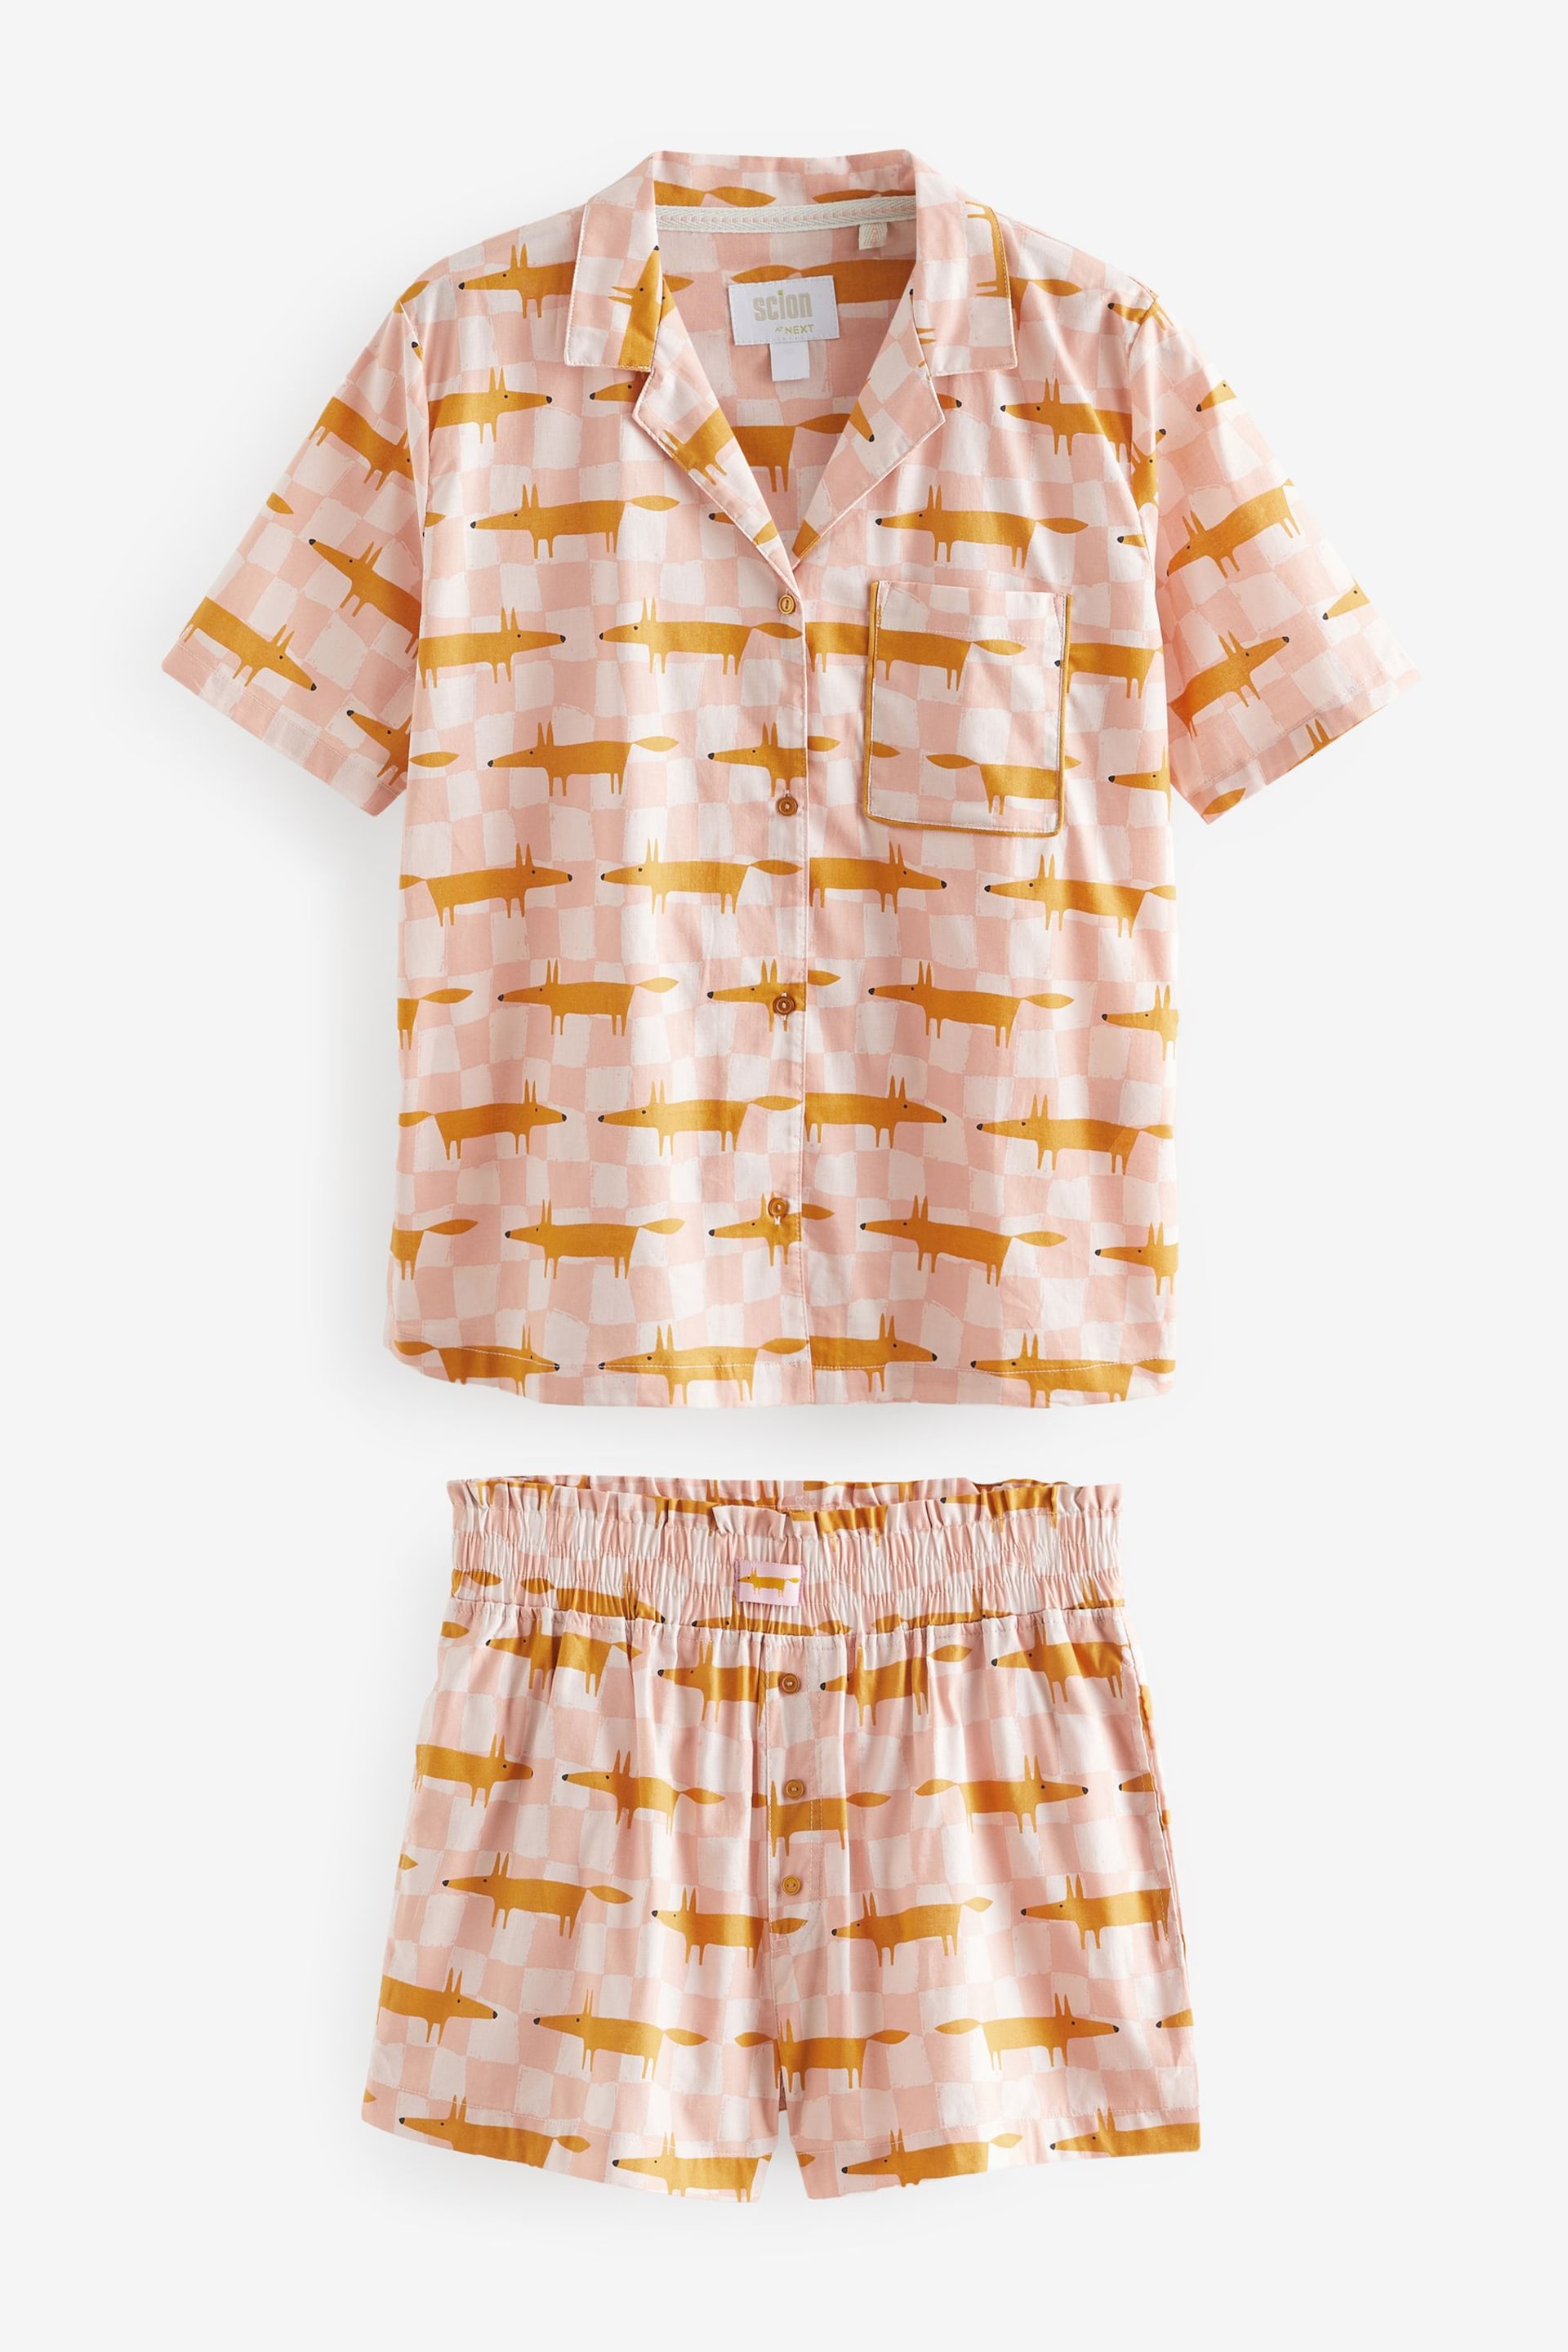 Pink/Cream Scion at Next Mr Fox Short Set Cotton Pyjamas - Image 7 of 10